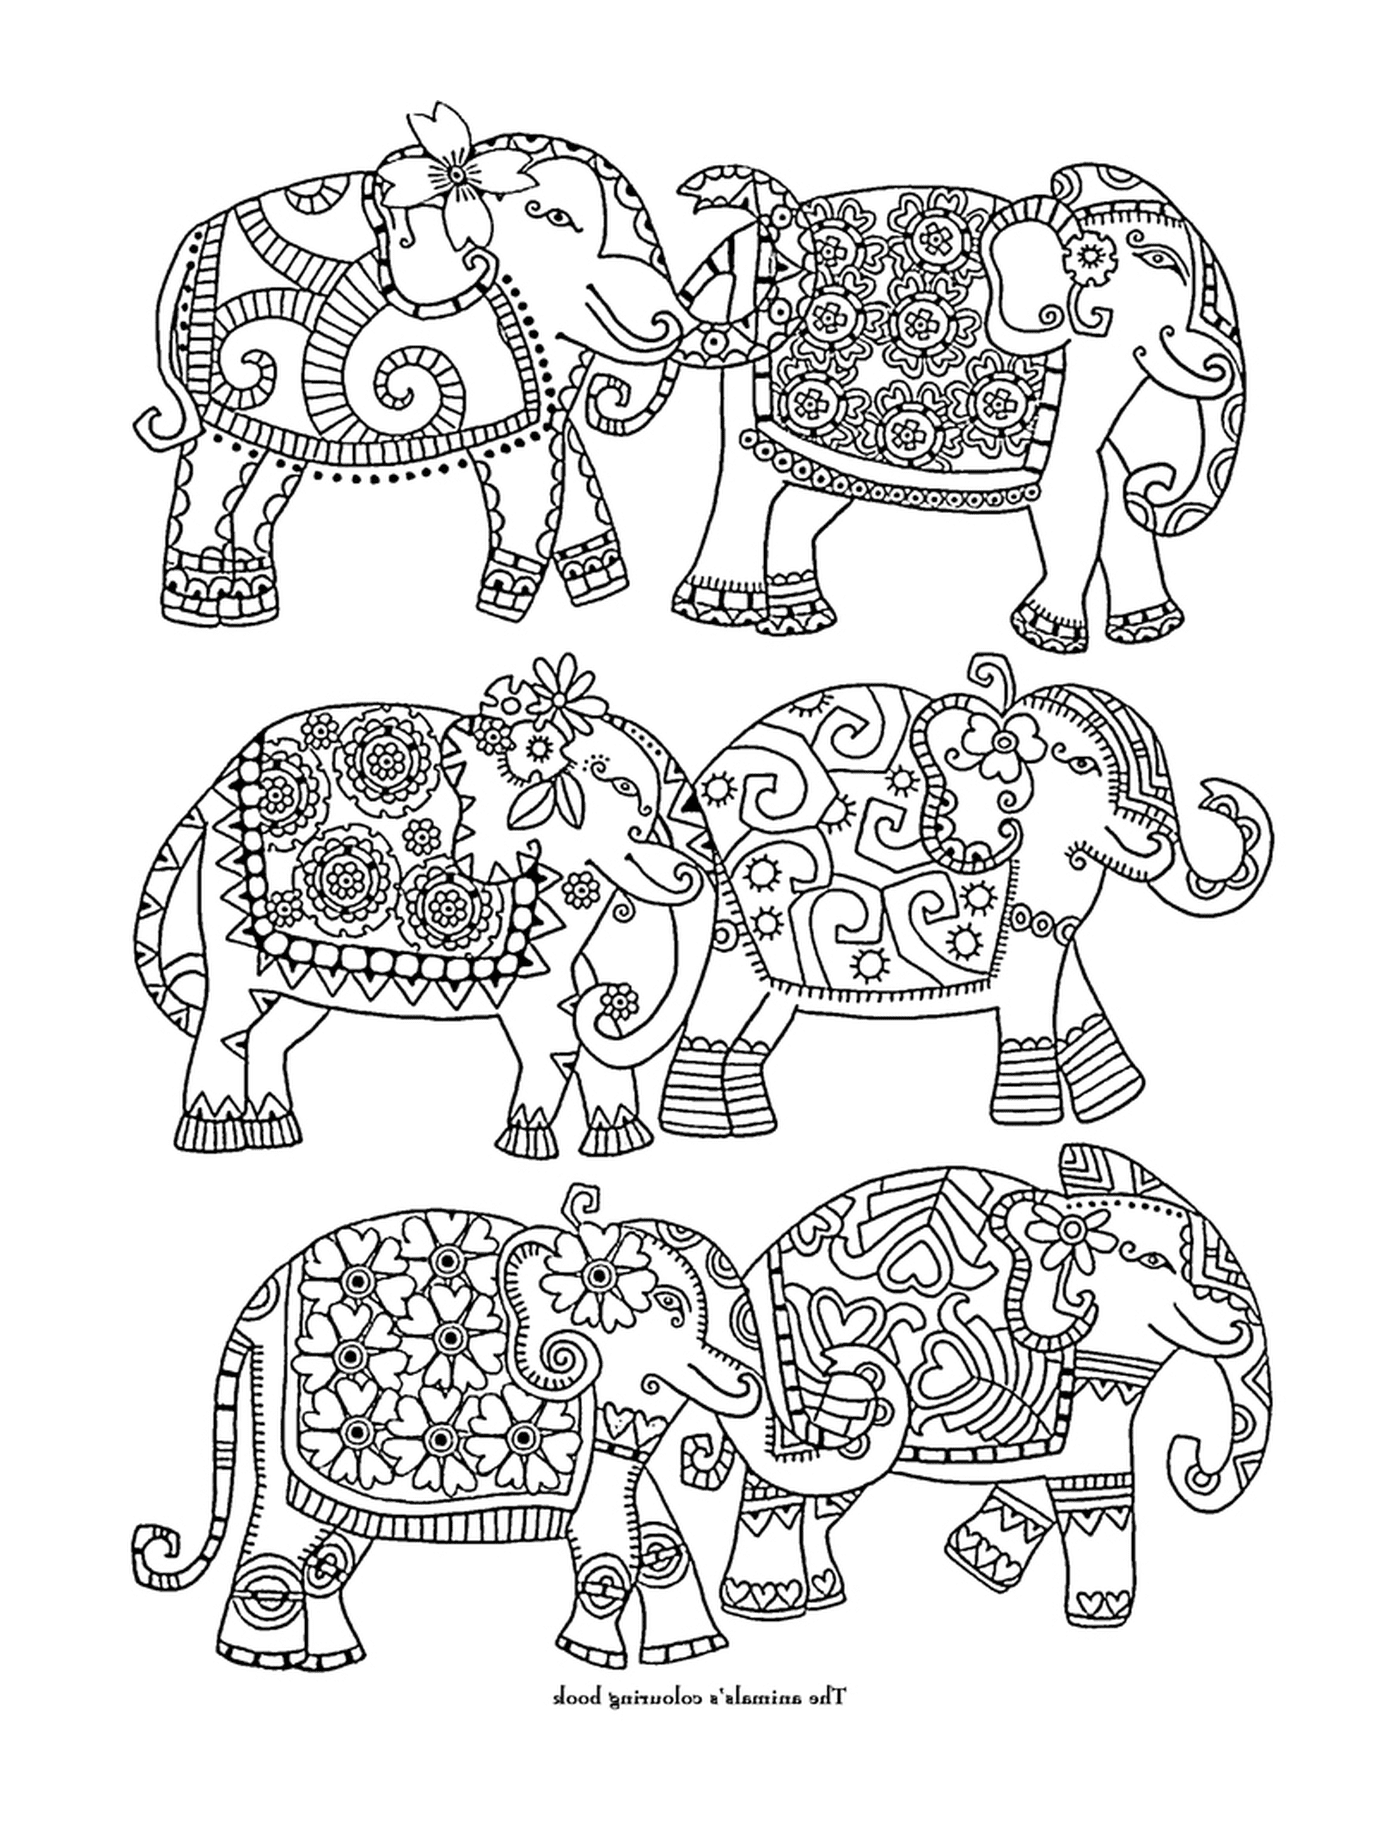  Un set di sei elefanti diversi 